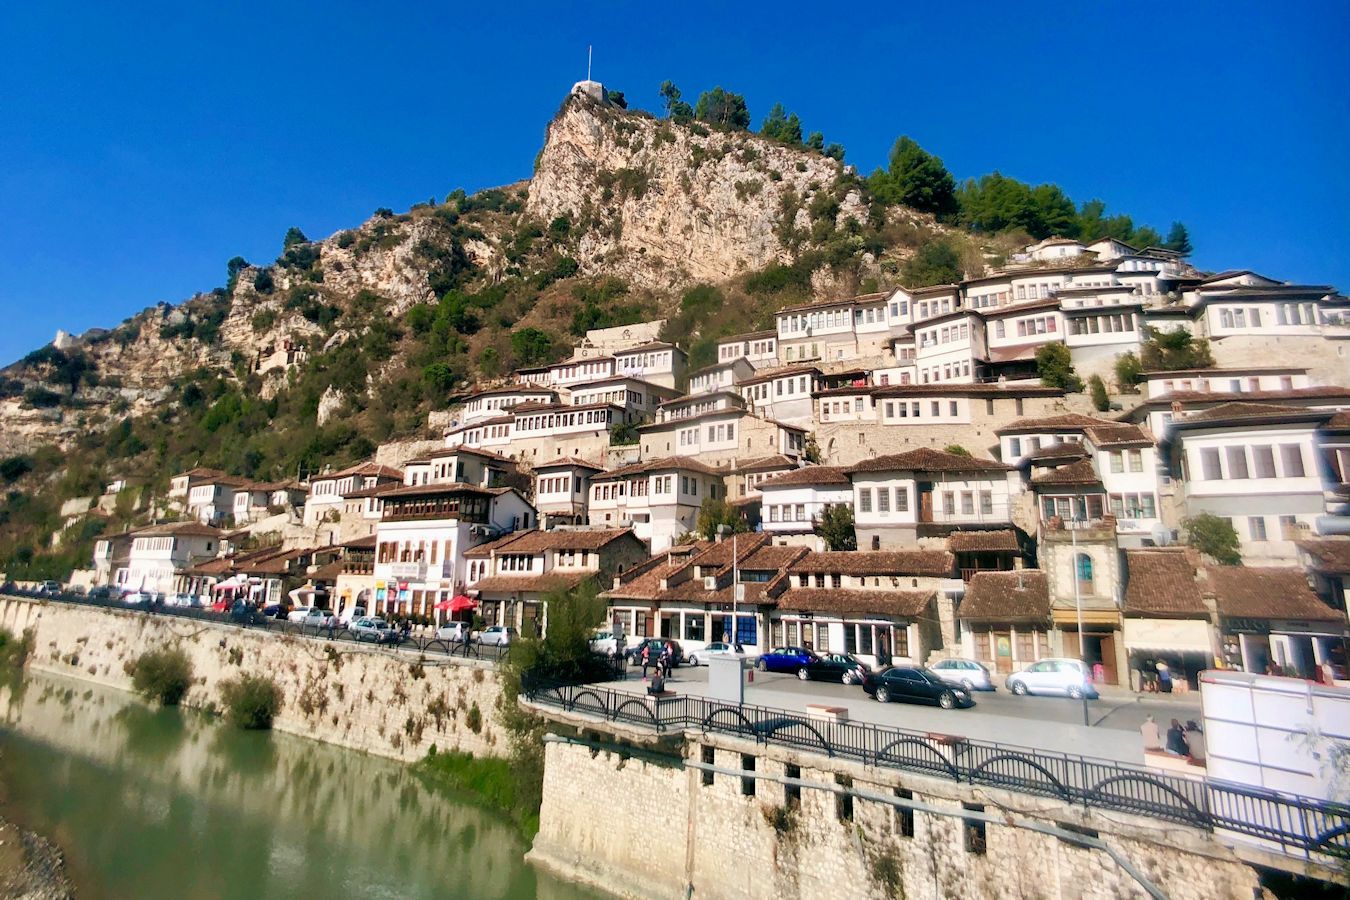 The city of Berat